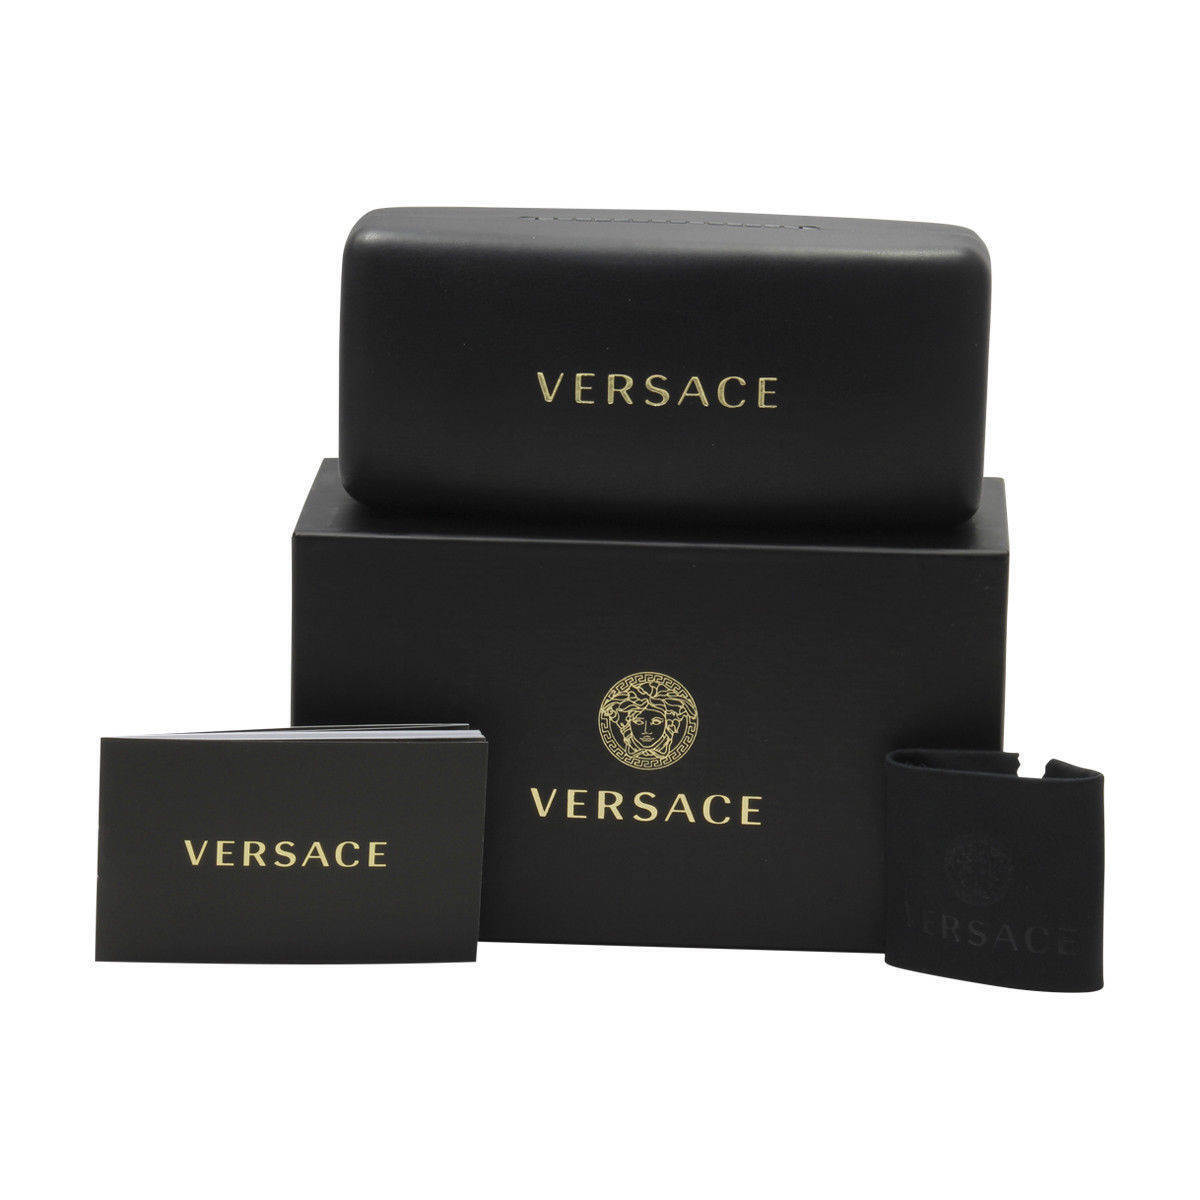 Versace VE4425U-536587-54 54mm New Sunglasses